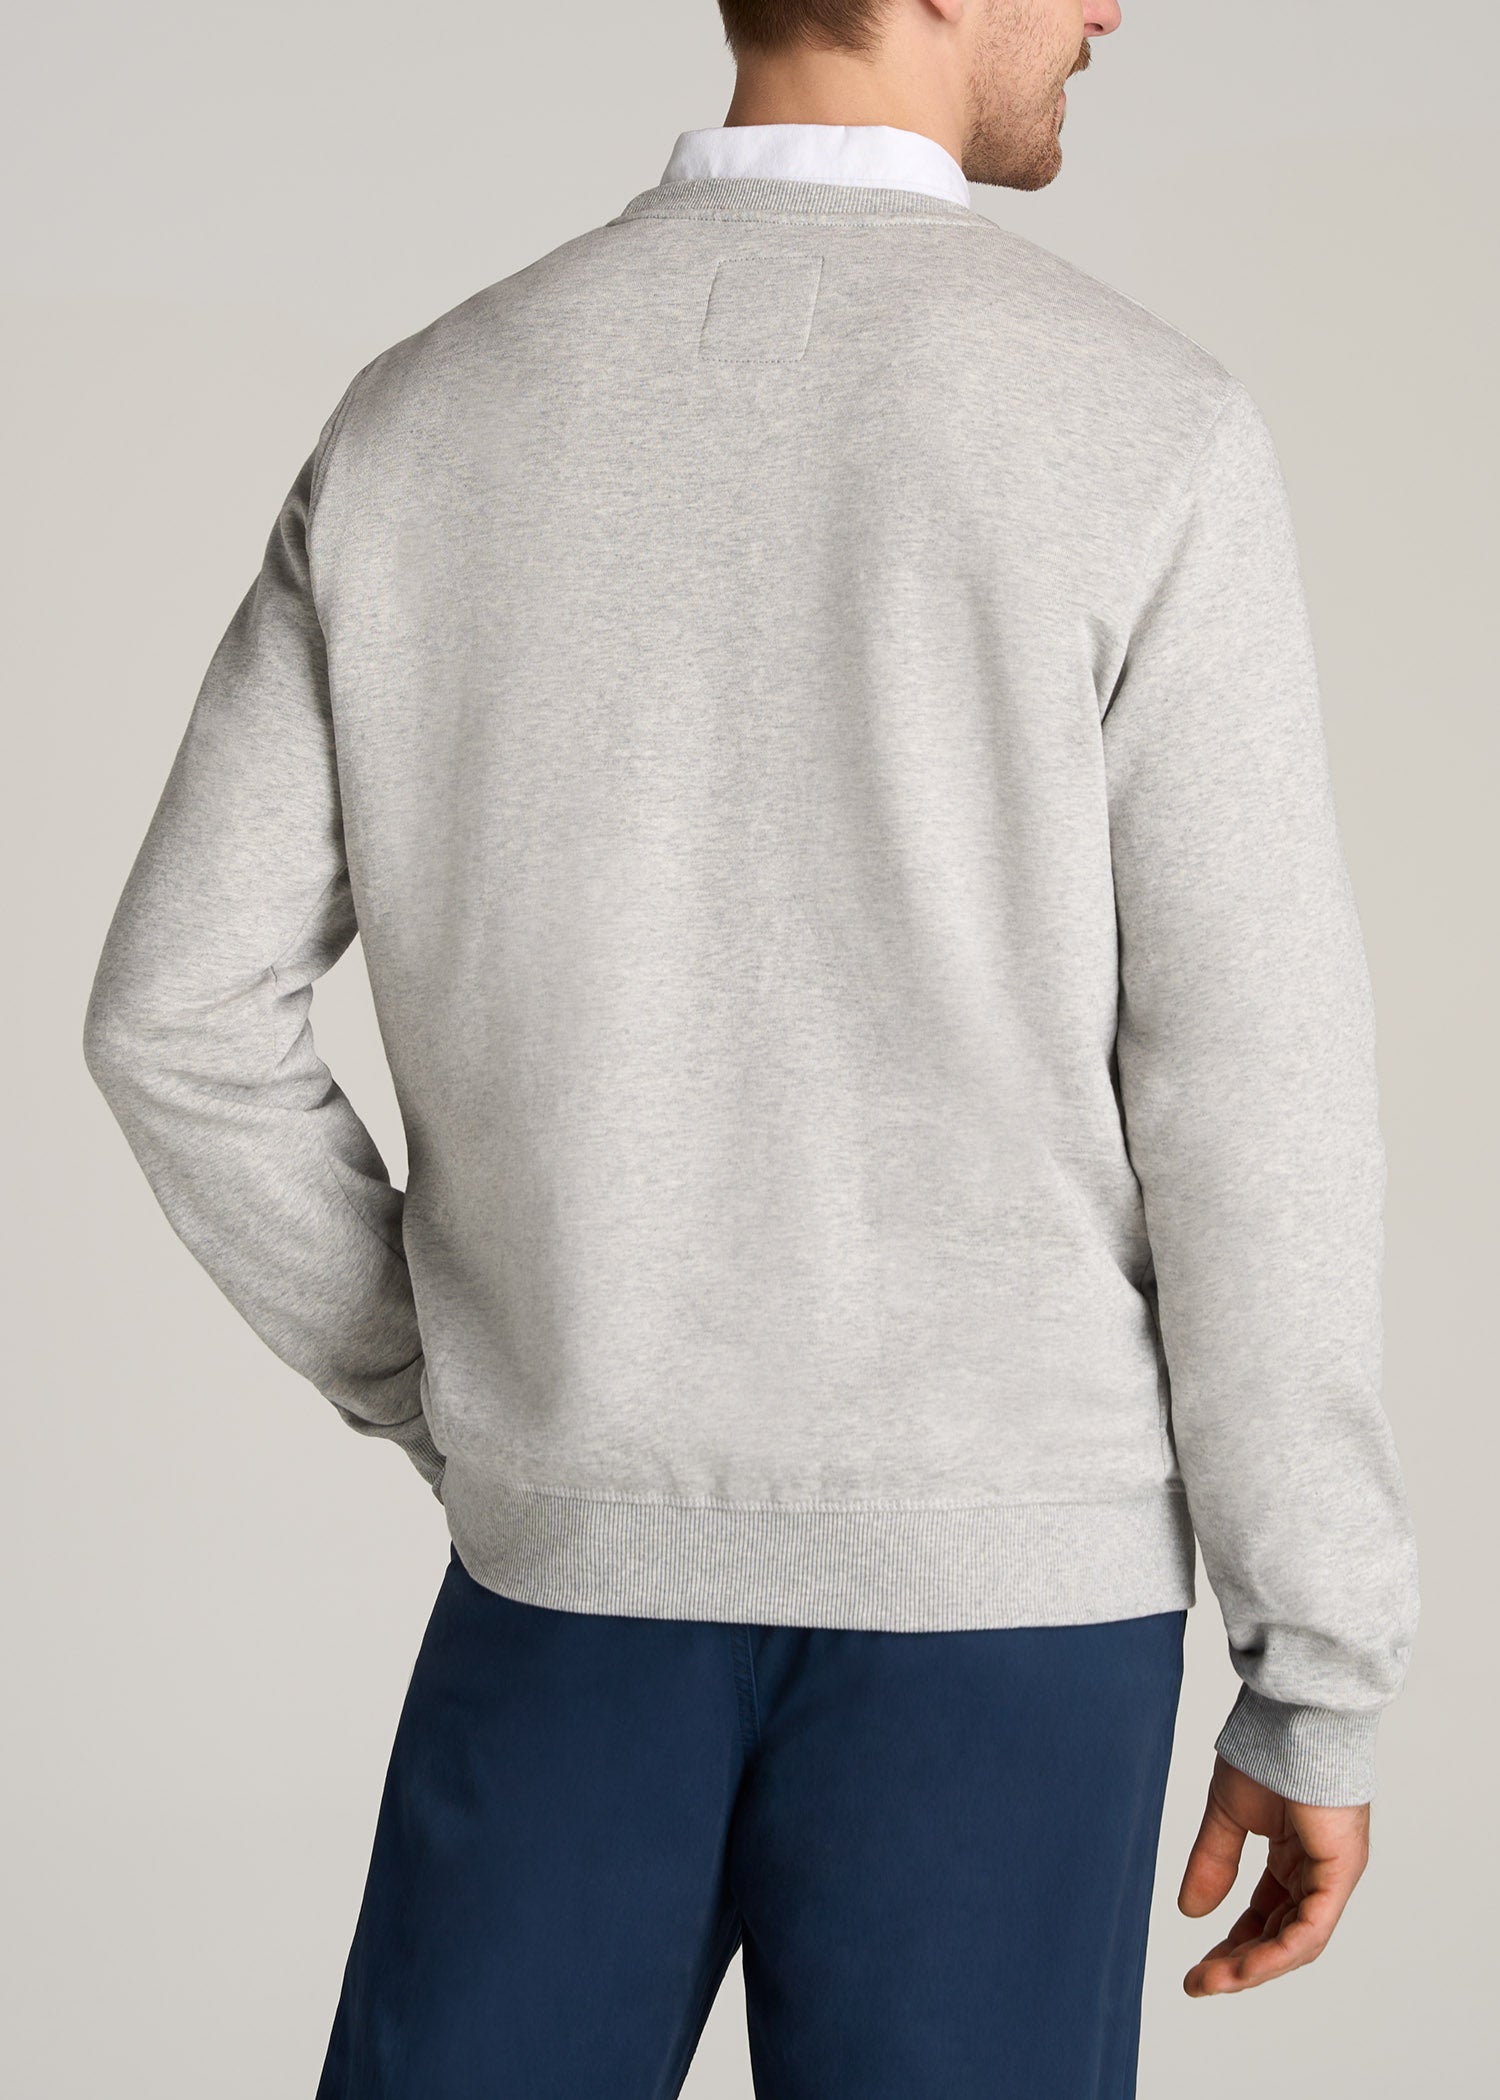 Men's Tall Crewneck Sweatshirt Grey Mix